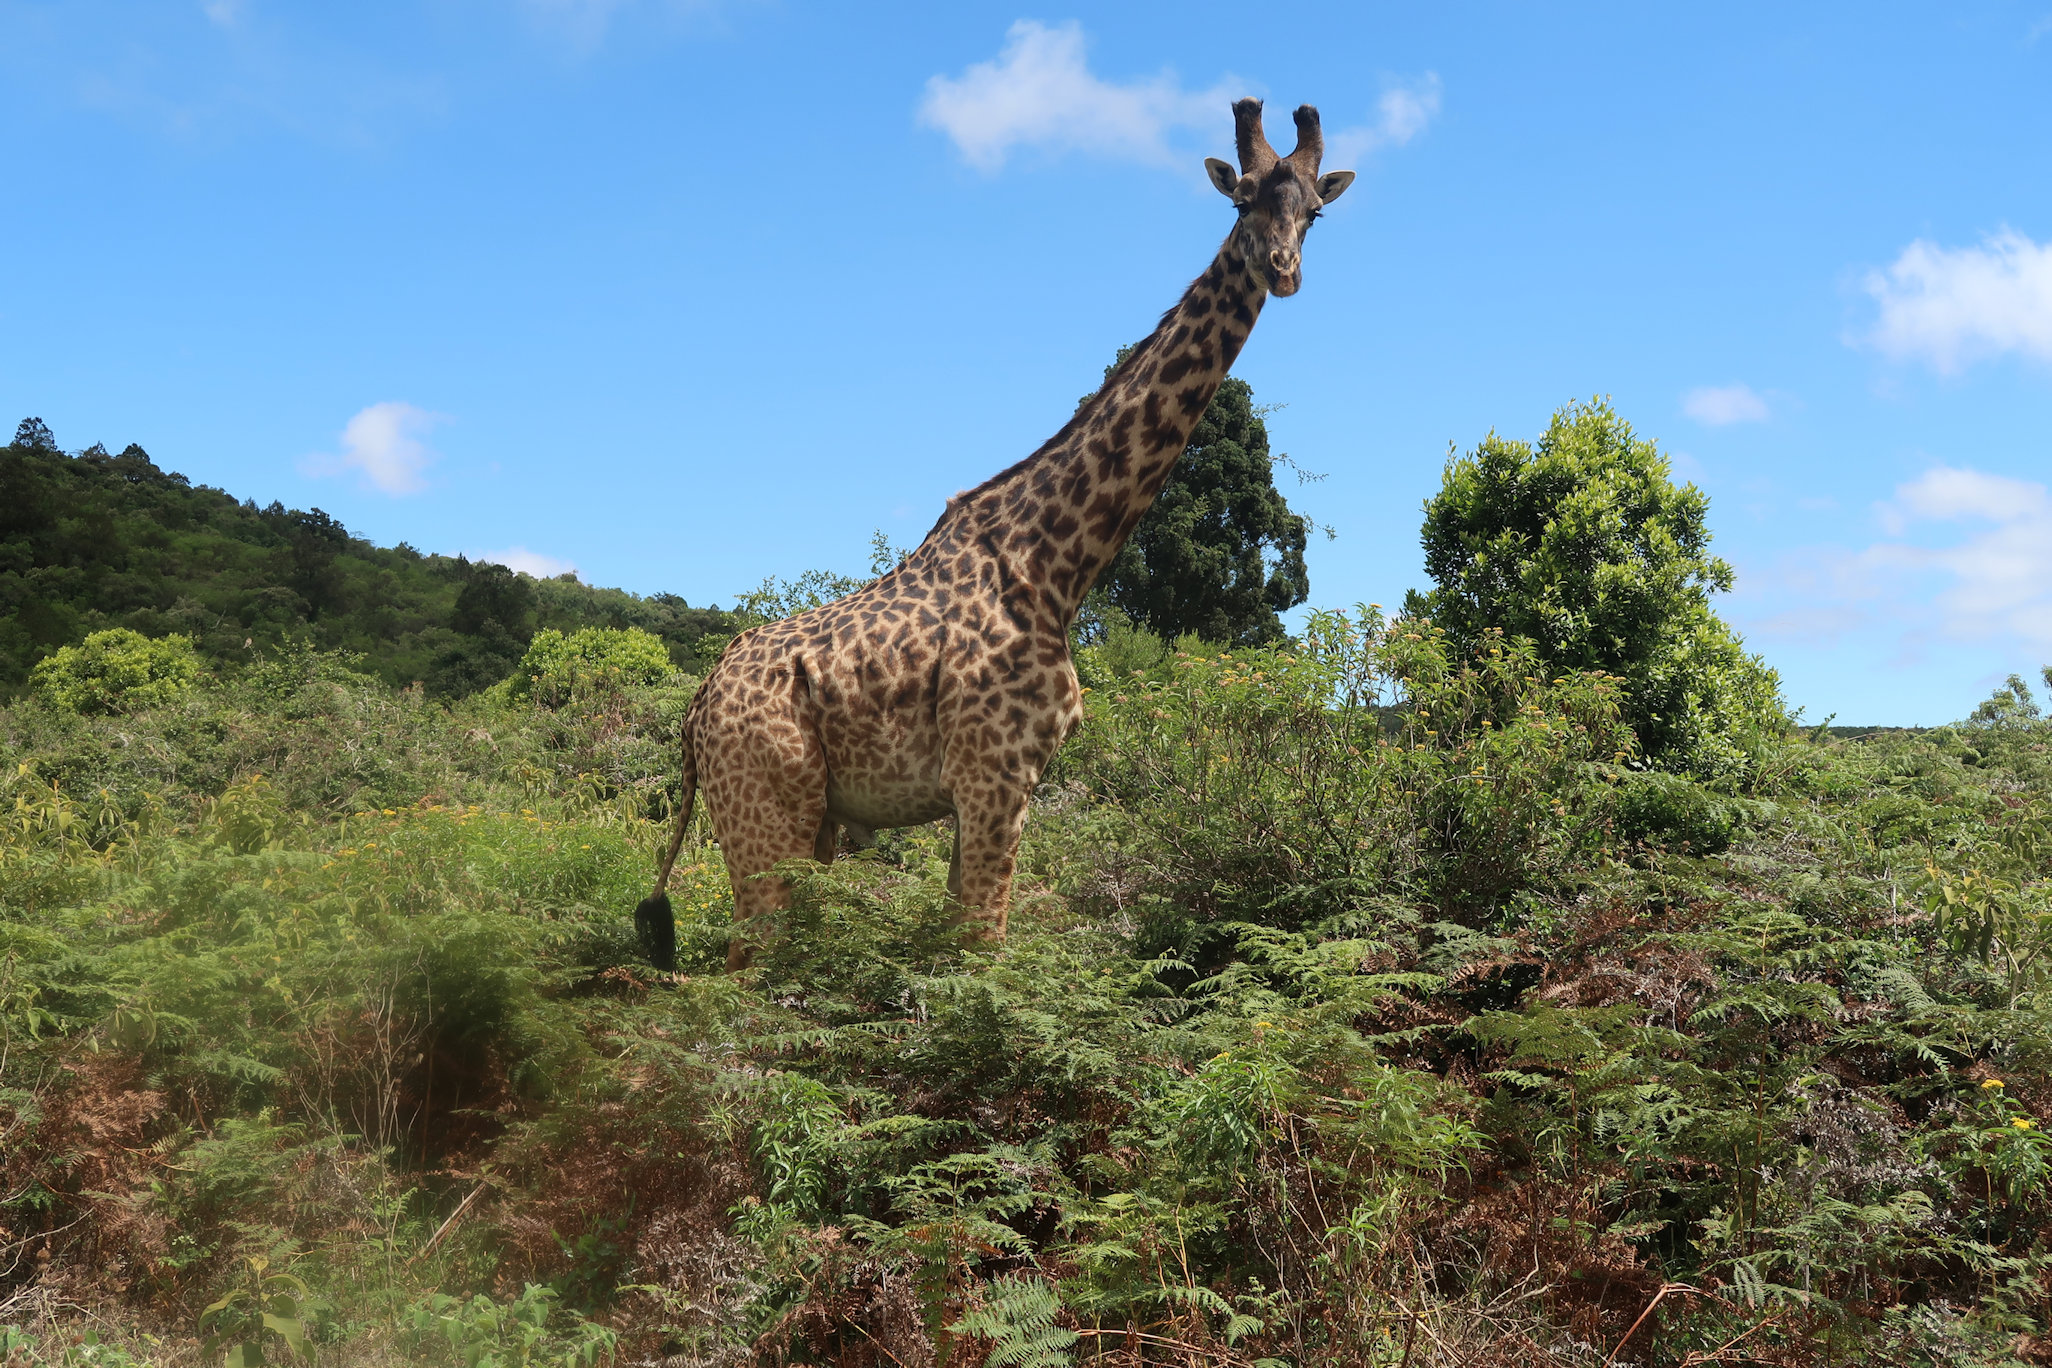 Giraffe on the plain